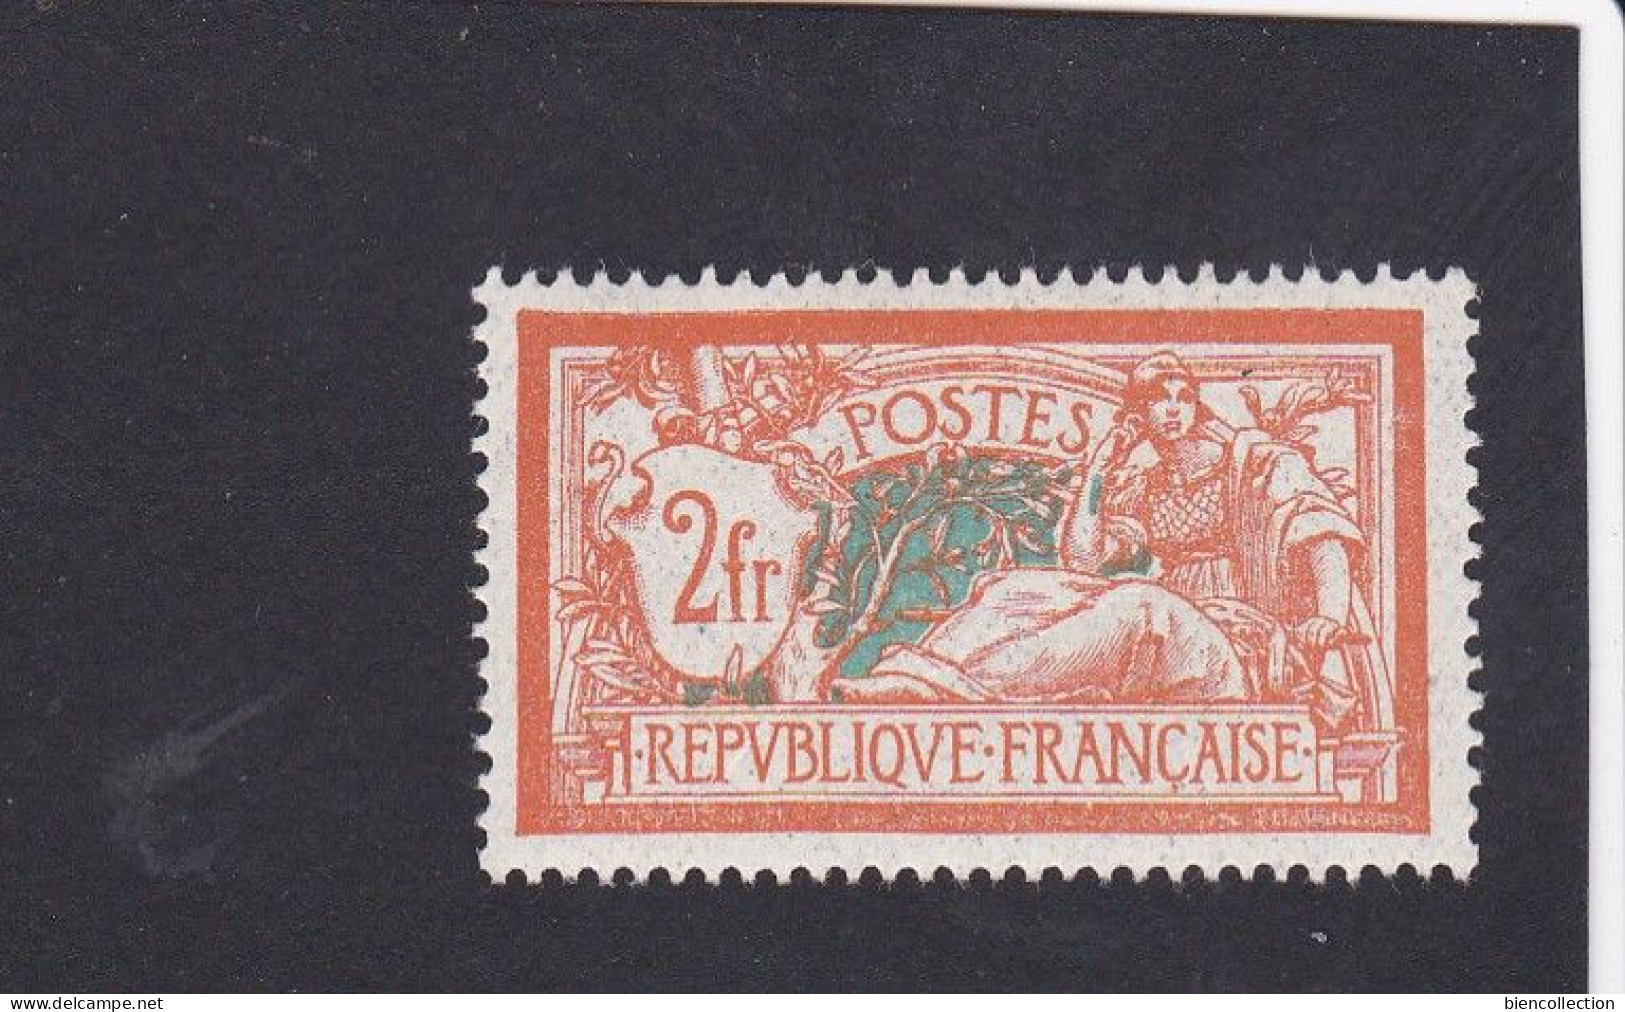 Timbre poste France année 1907 type Merson dentelés N° 145 neuf